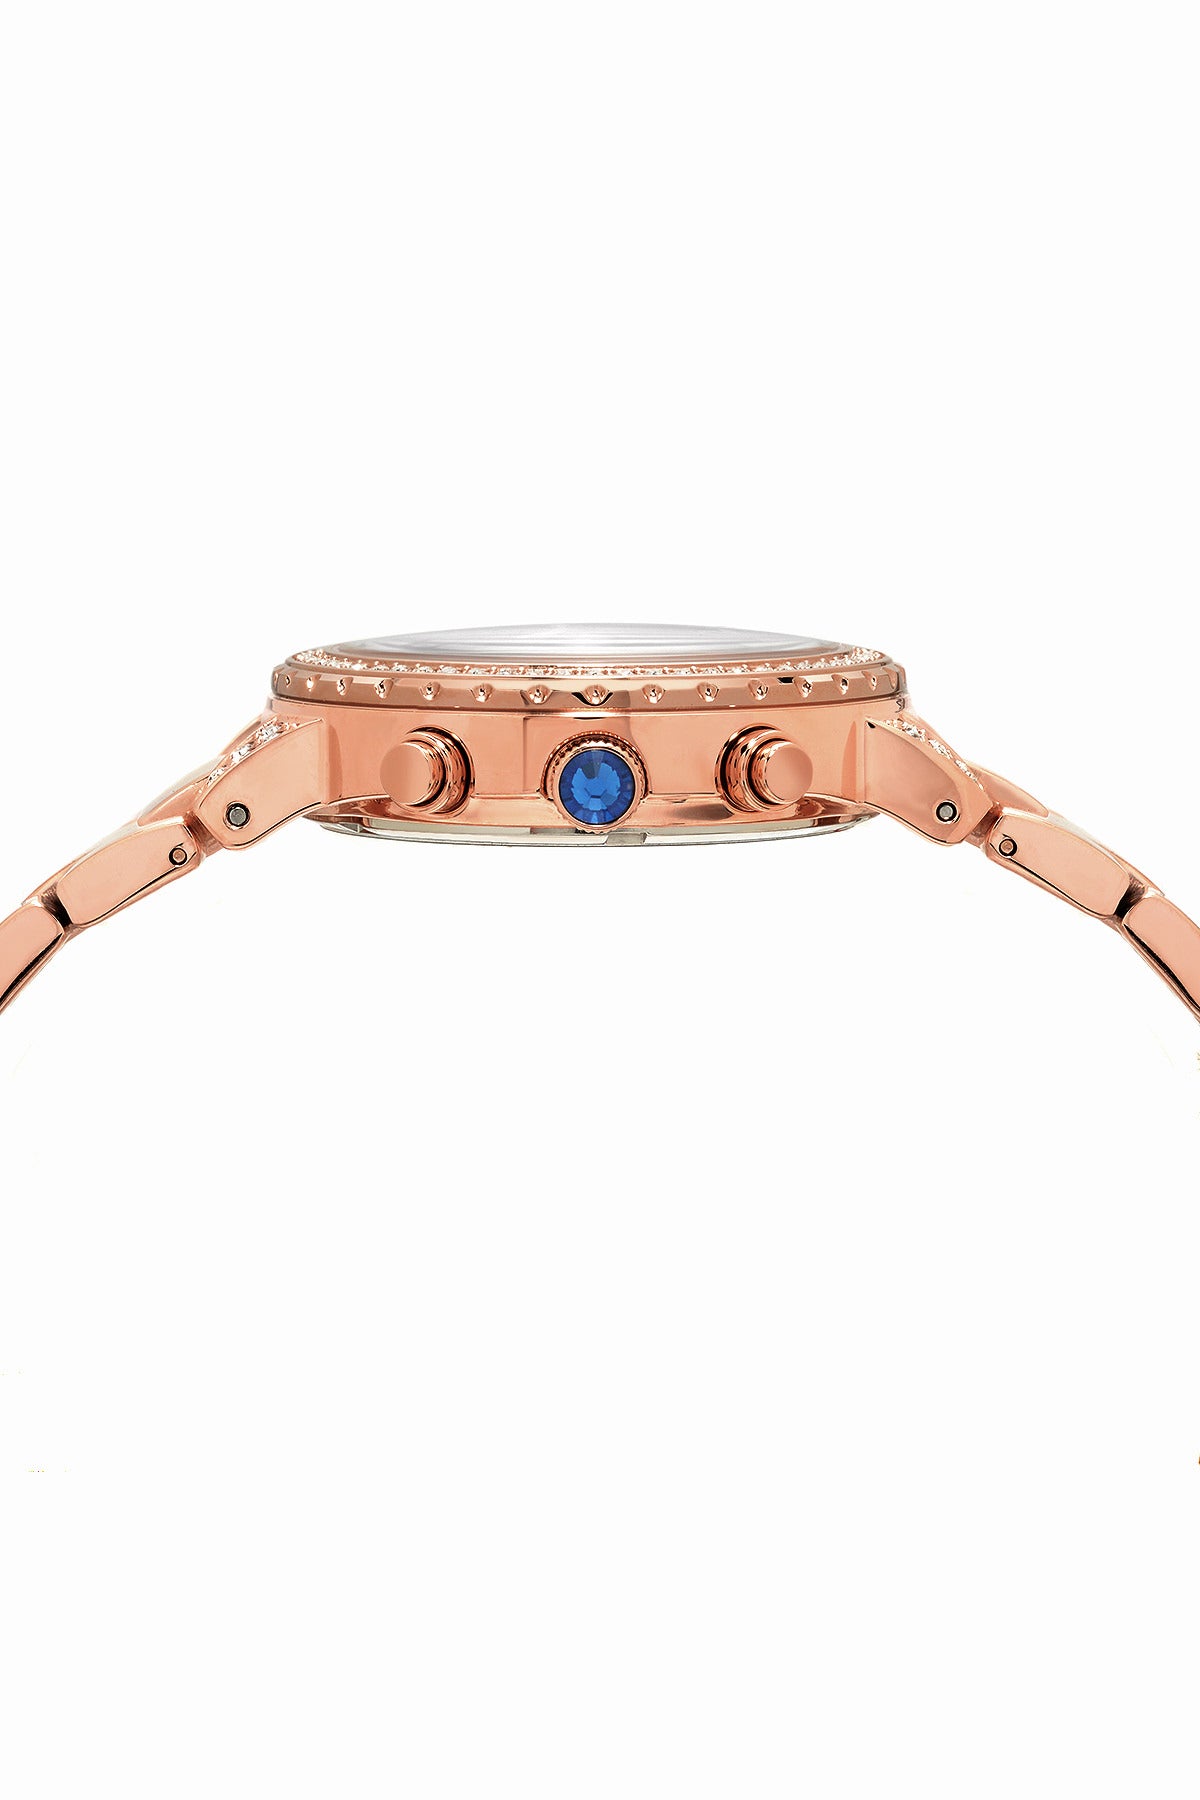 Porsamo Bleu Pilar luxury chronograph women's stainless steel watch, rose, blue 502CPIS